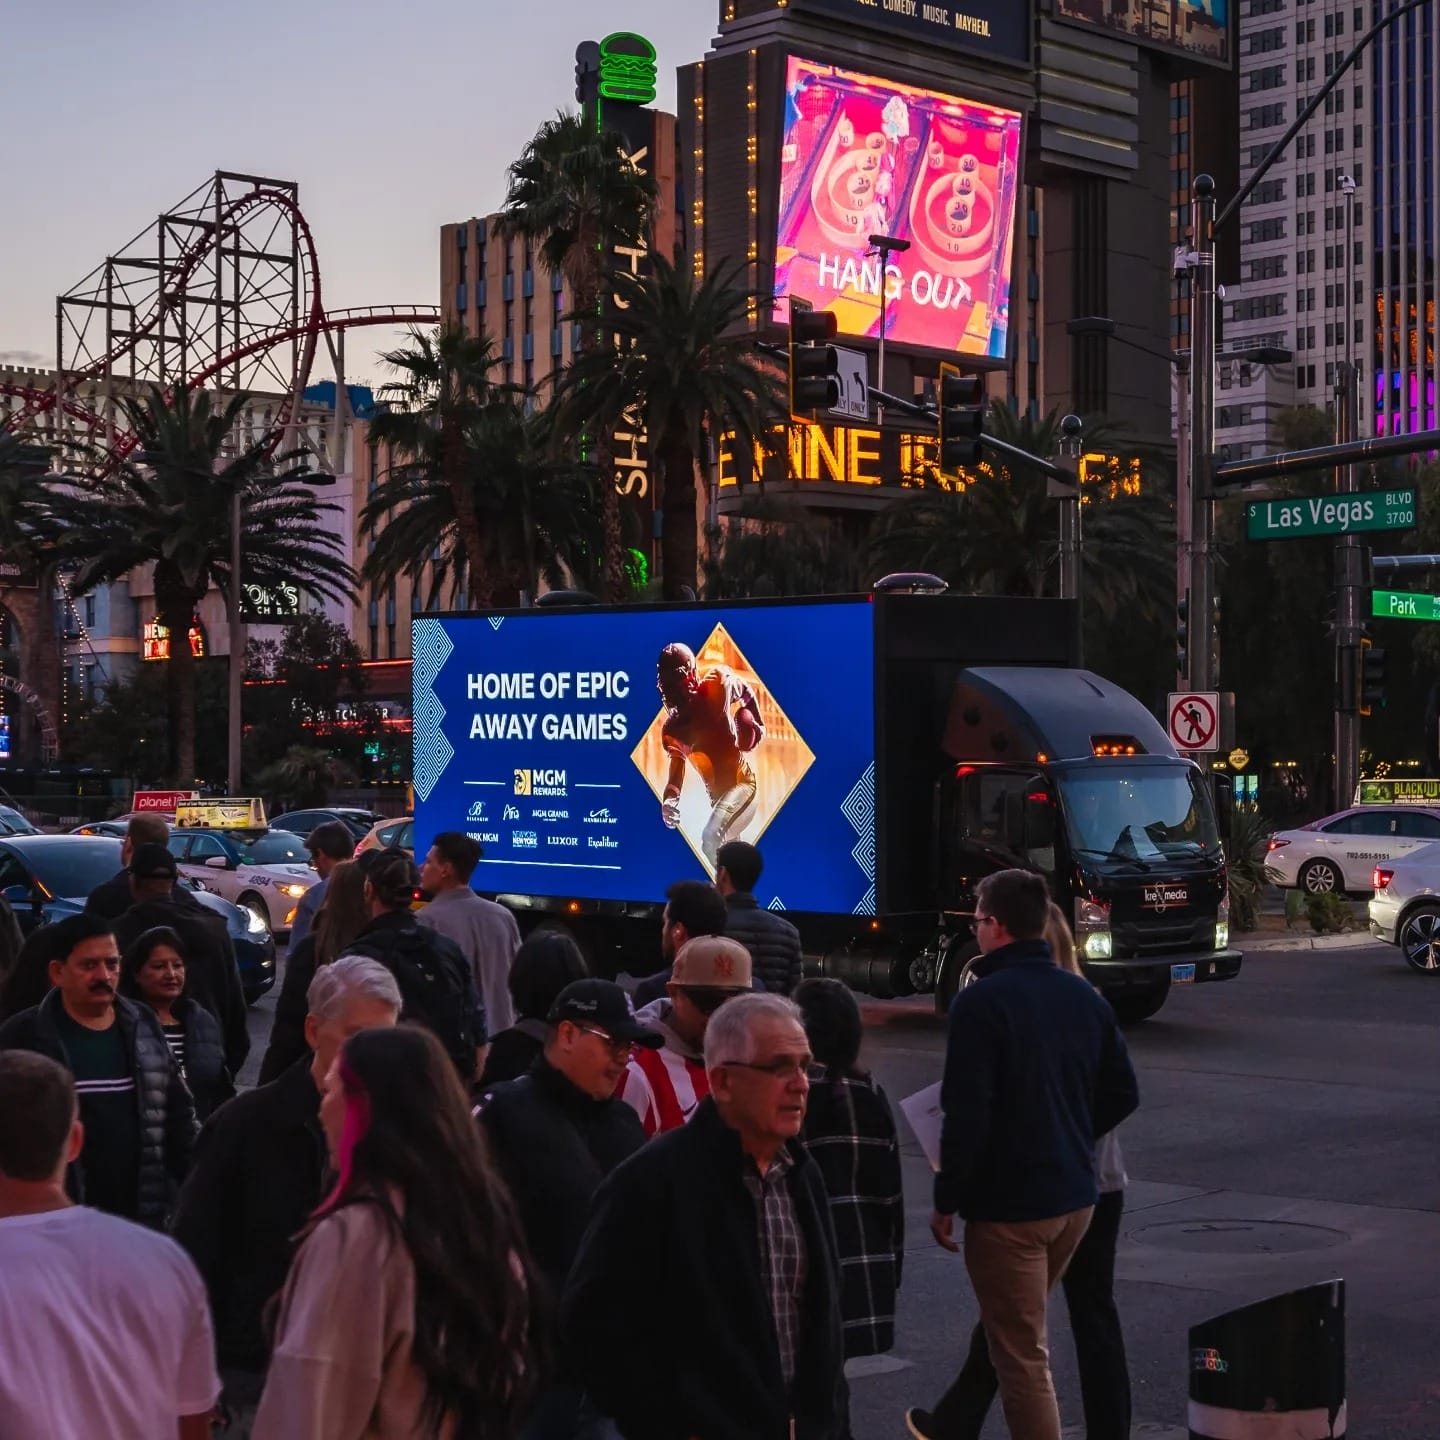 Crowd walking near illuminated billboards in Las Vegas.